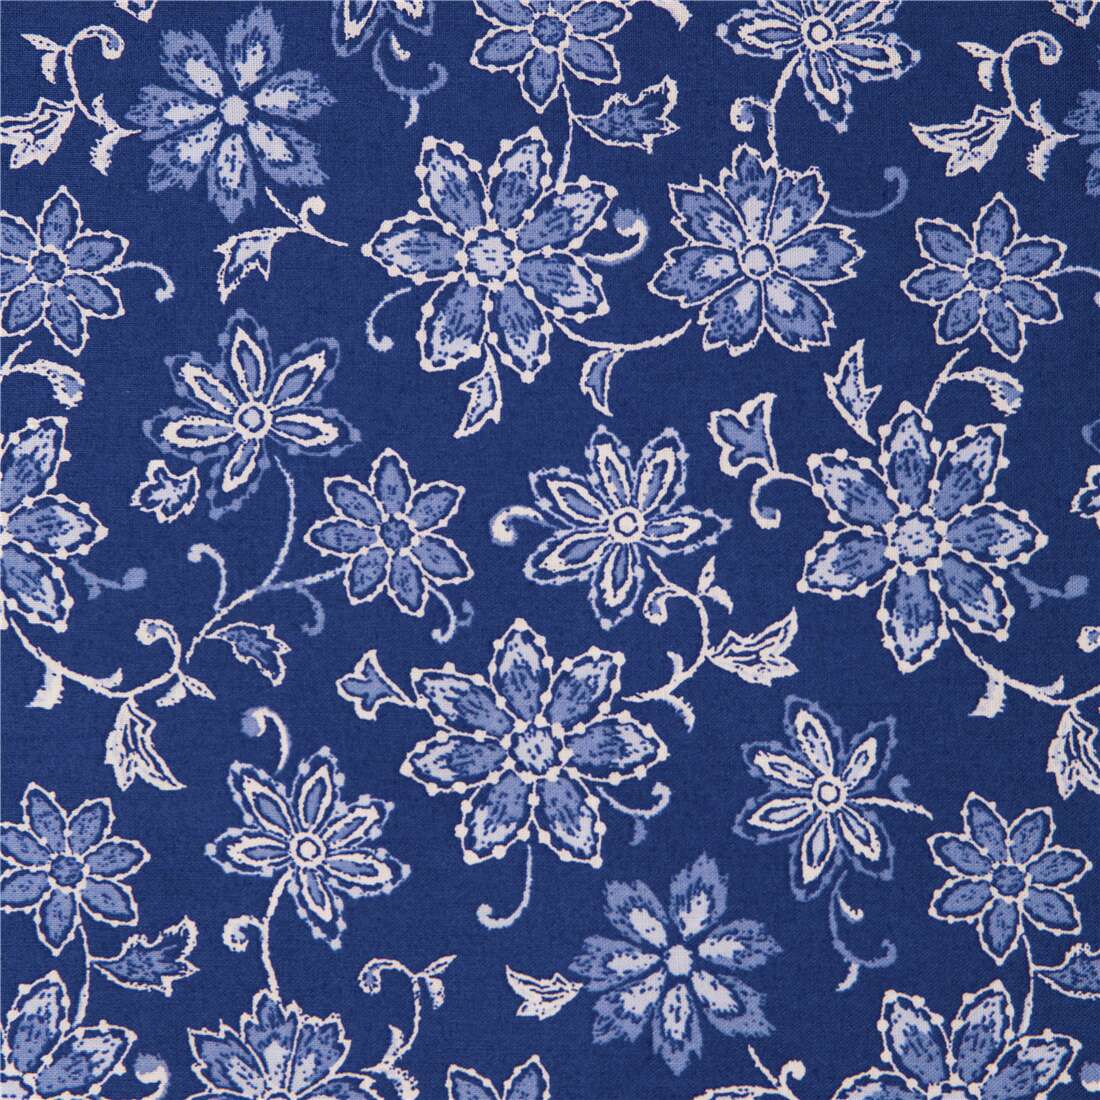 Bata larga de algodón batik artesanal para mujer - bosque azul